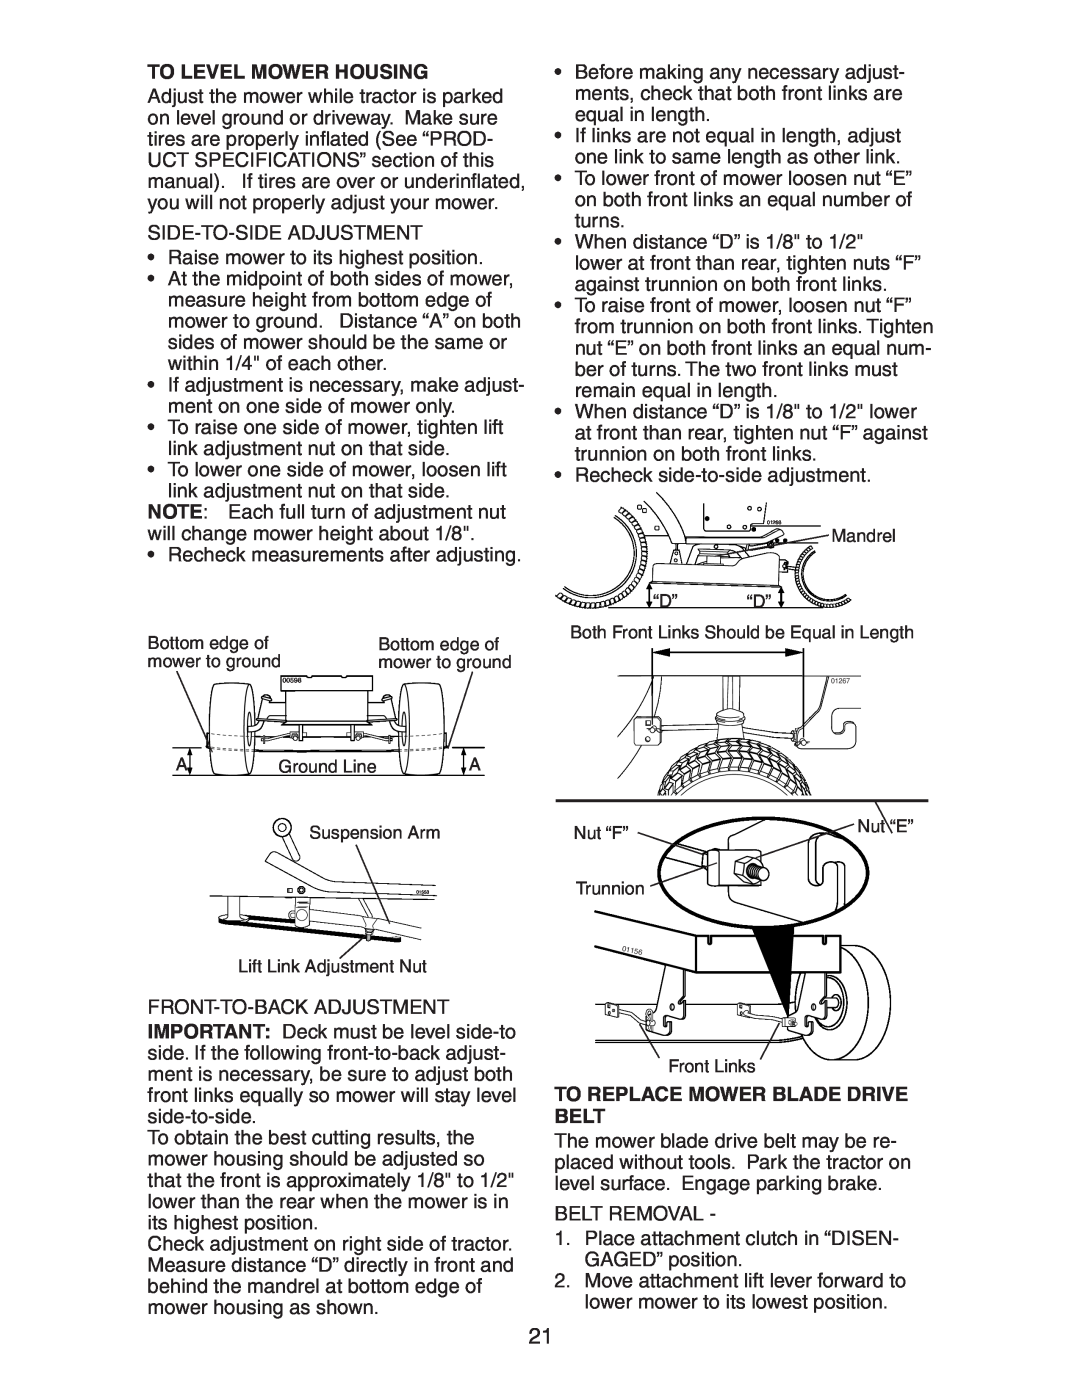 Poulan 271490 manual To Level Mower Housing, To Replace Mower Blade Drive Belt 